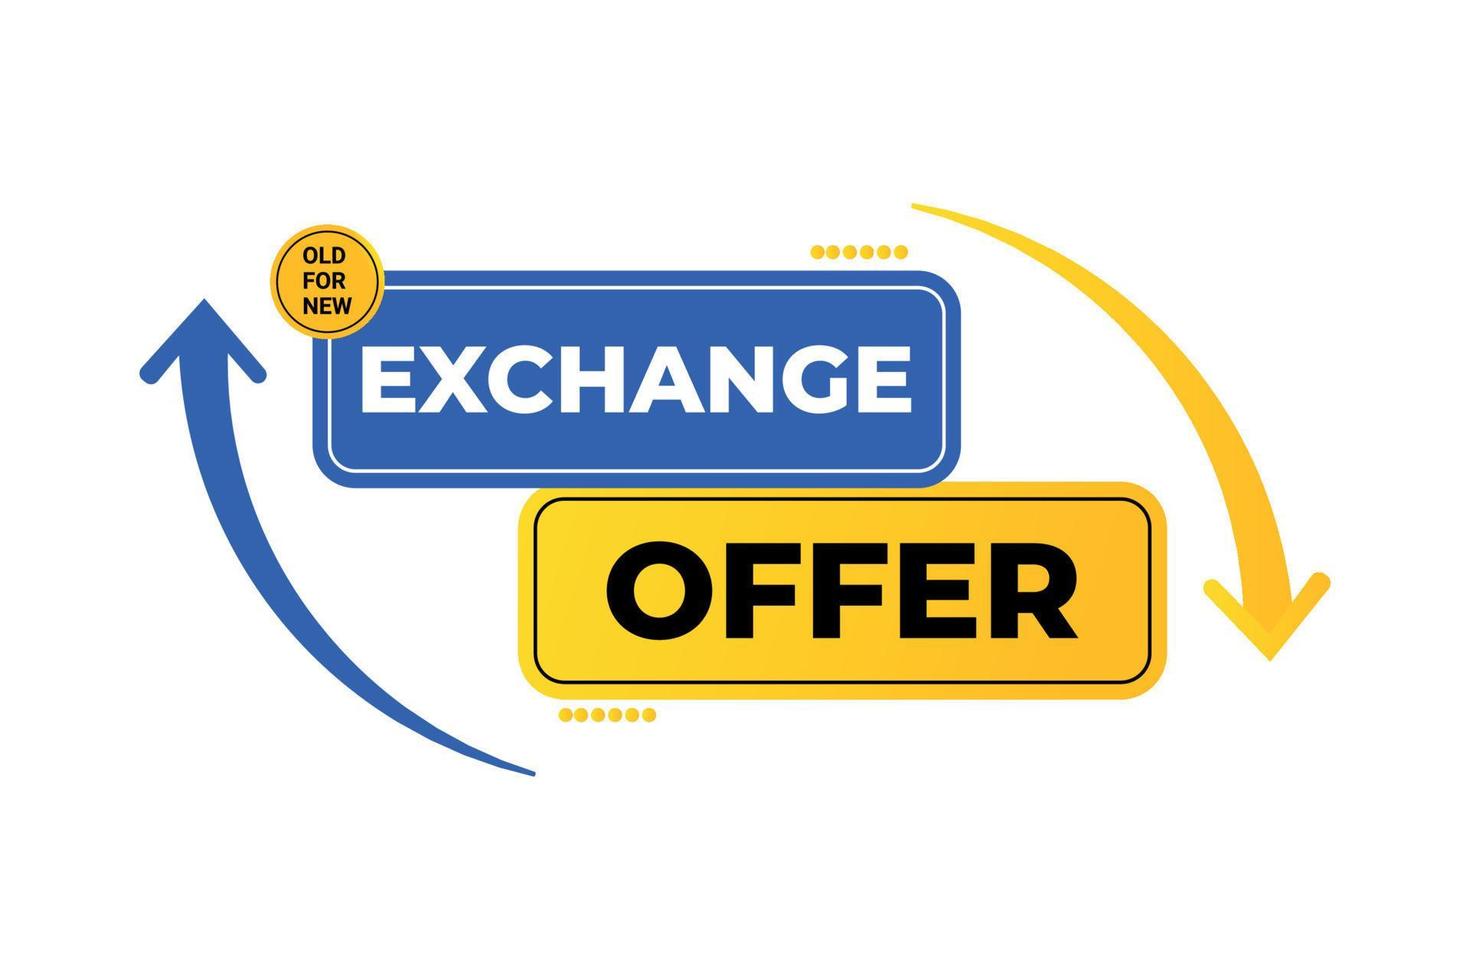 exchange offer vector design for business promotion